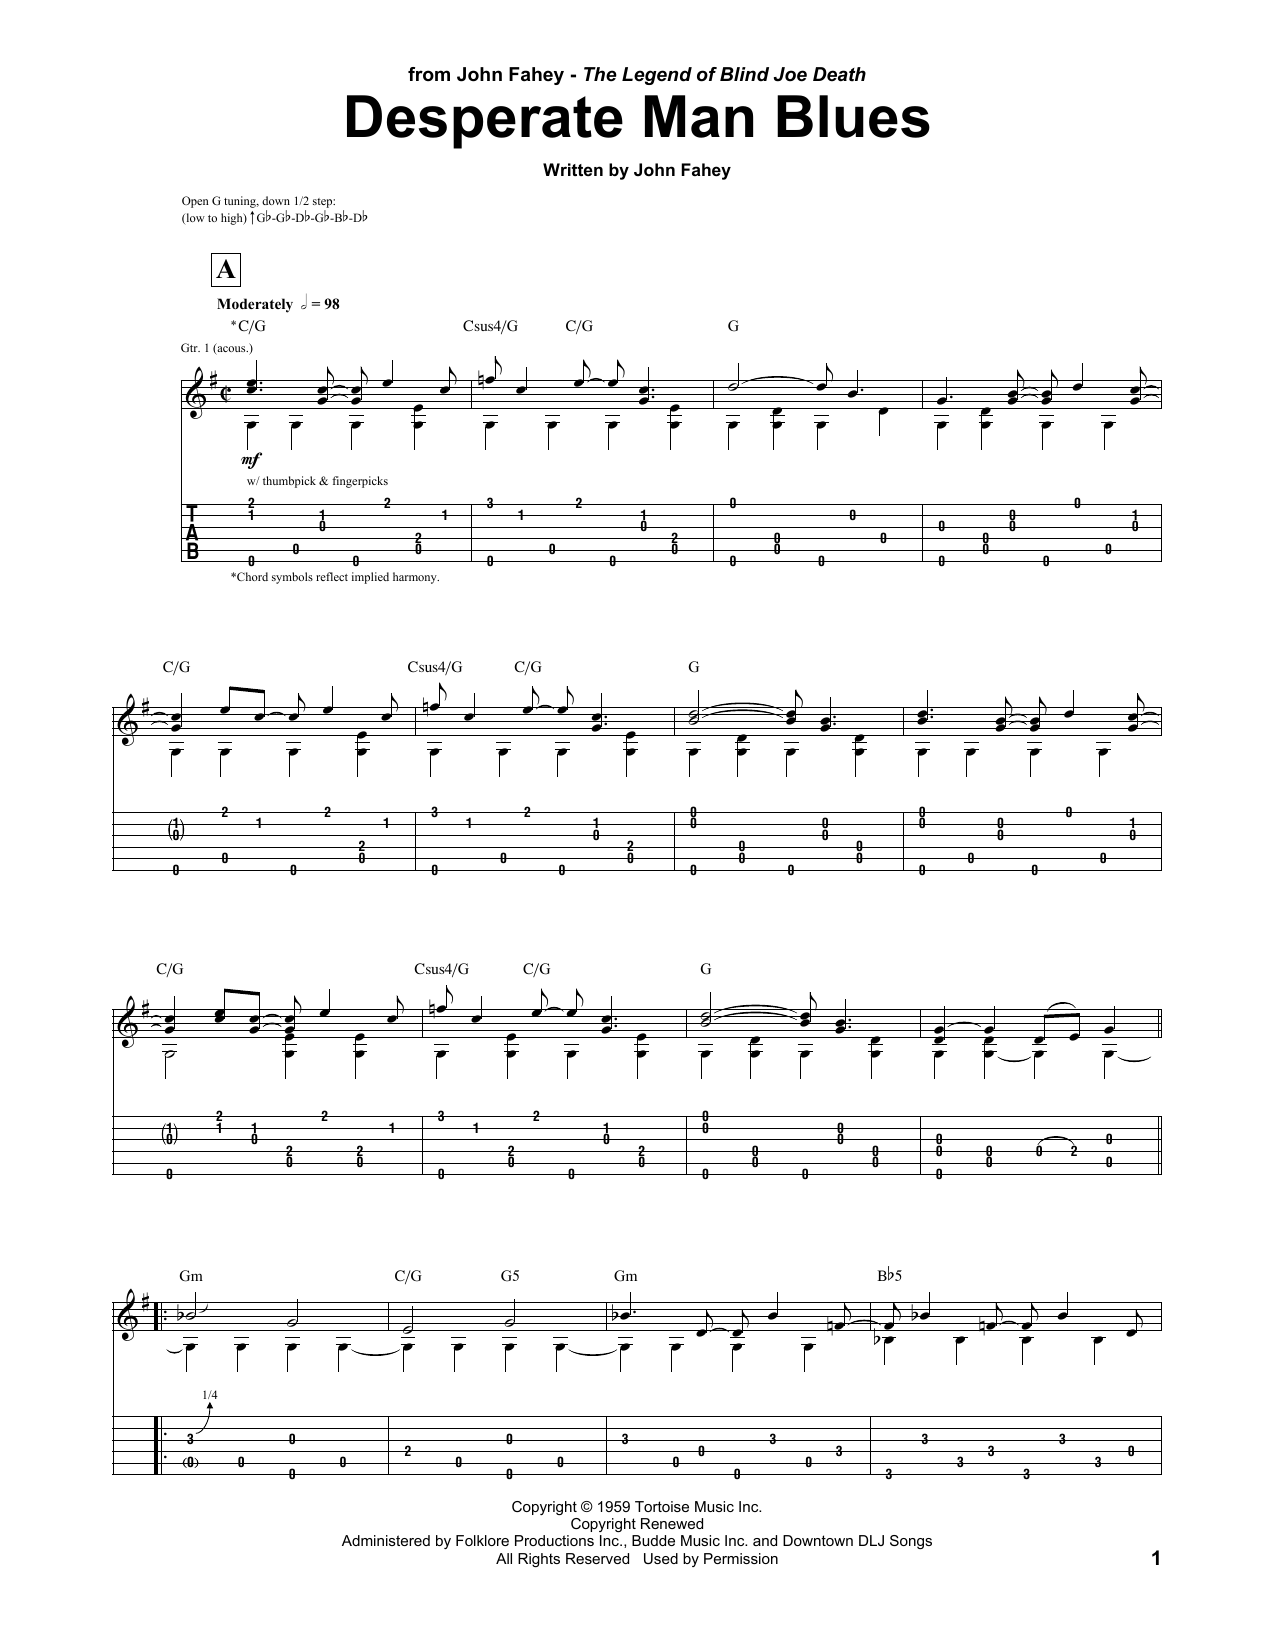 John Fahey Desperate Man Blues Sheet Music Notes & Chords for Guitar Lead Sheet - Download or Print PDF